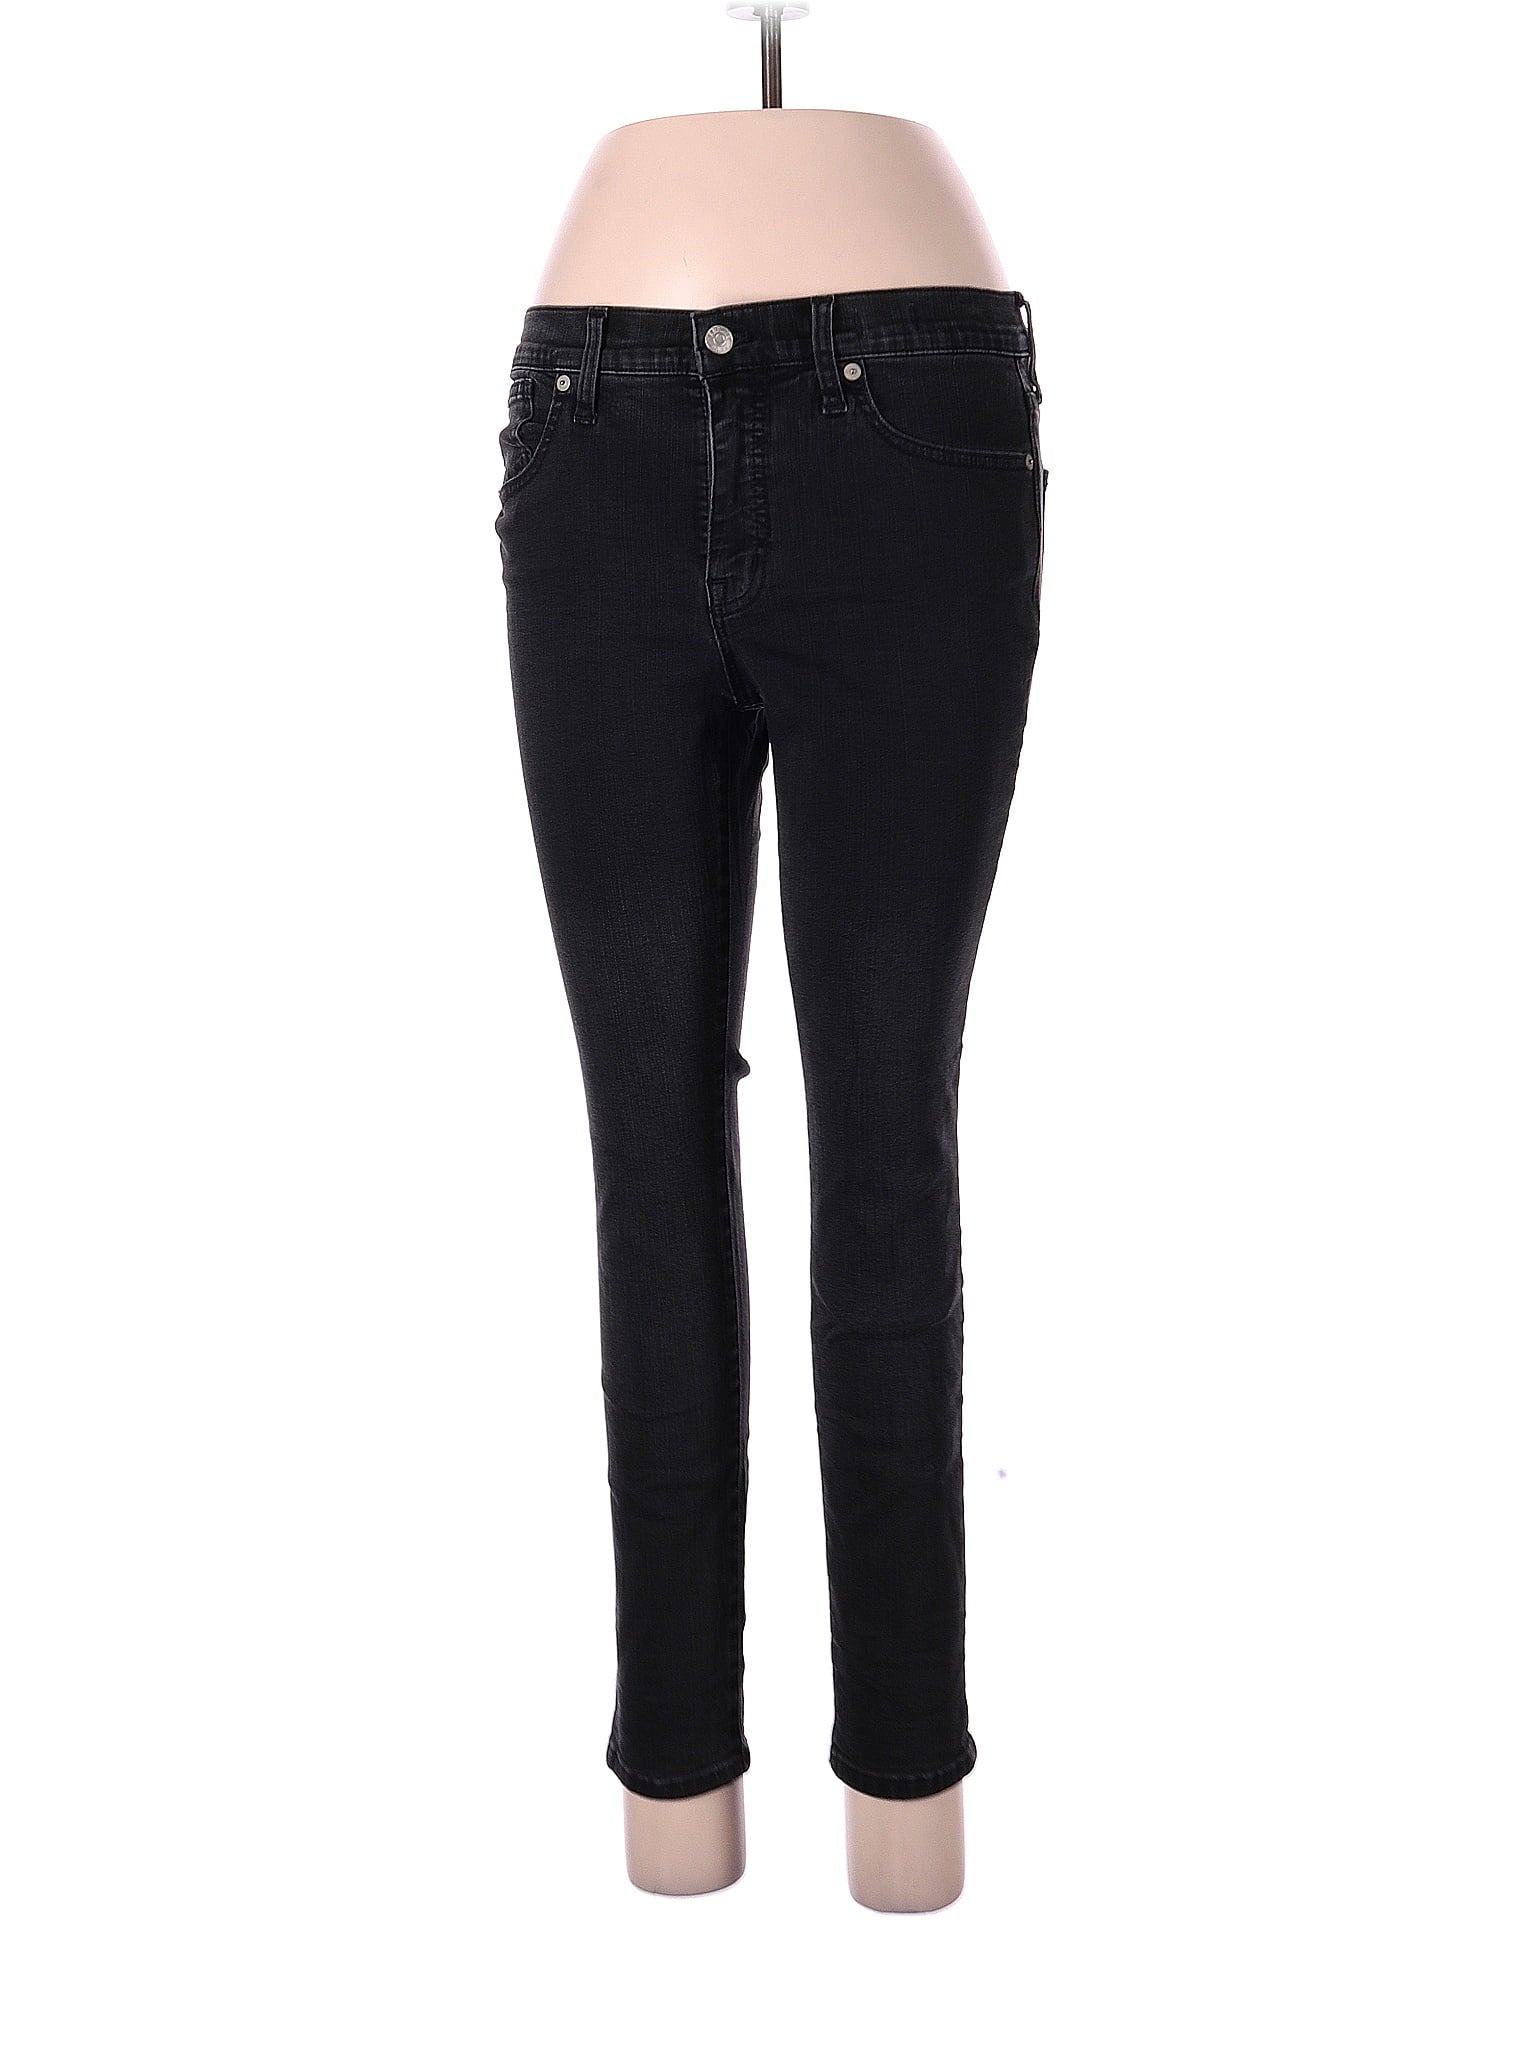 Mid-Rise Boyjeans Jeans in Dark Wash waist size - 29 P